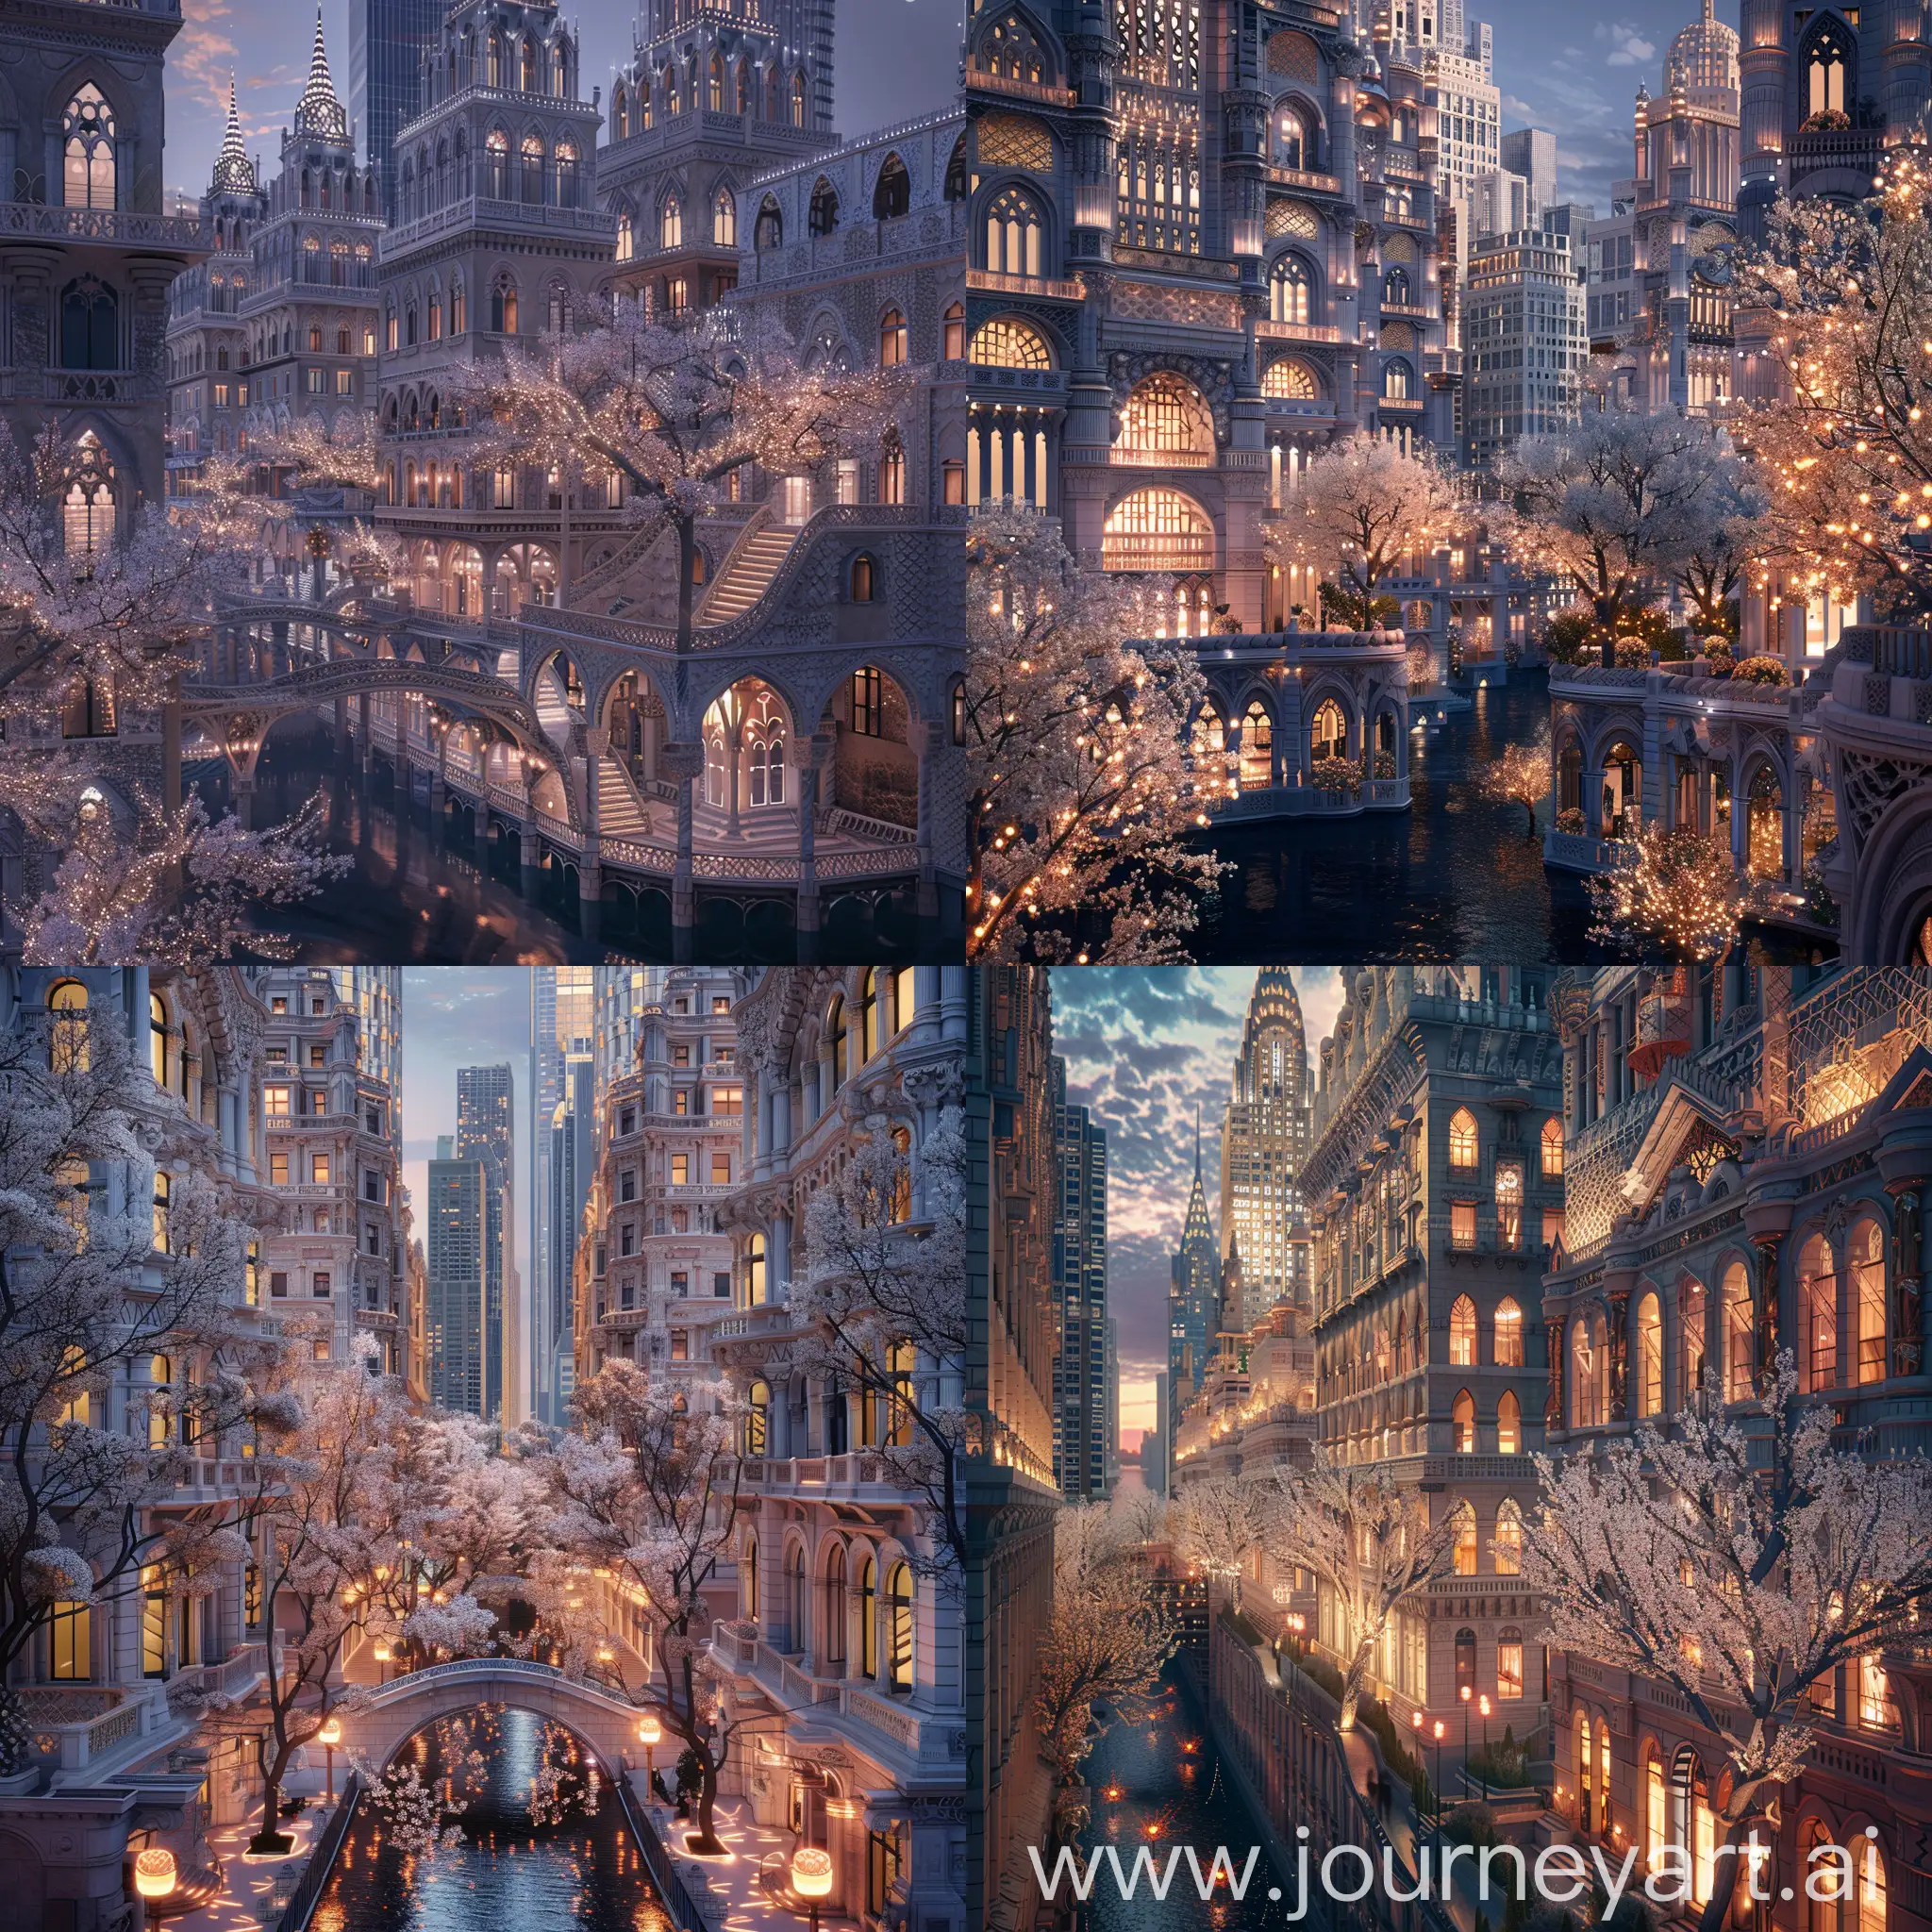 Enchanting-Futuristic-New-York-Cityscape-with-Ornate-Travertine-Architecture